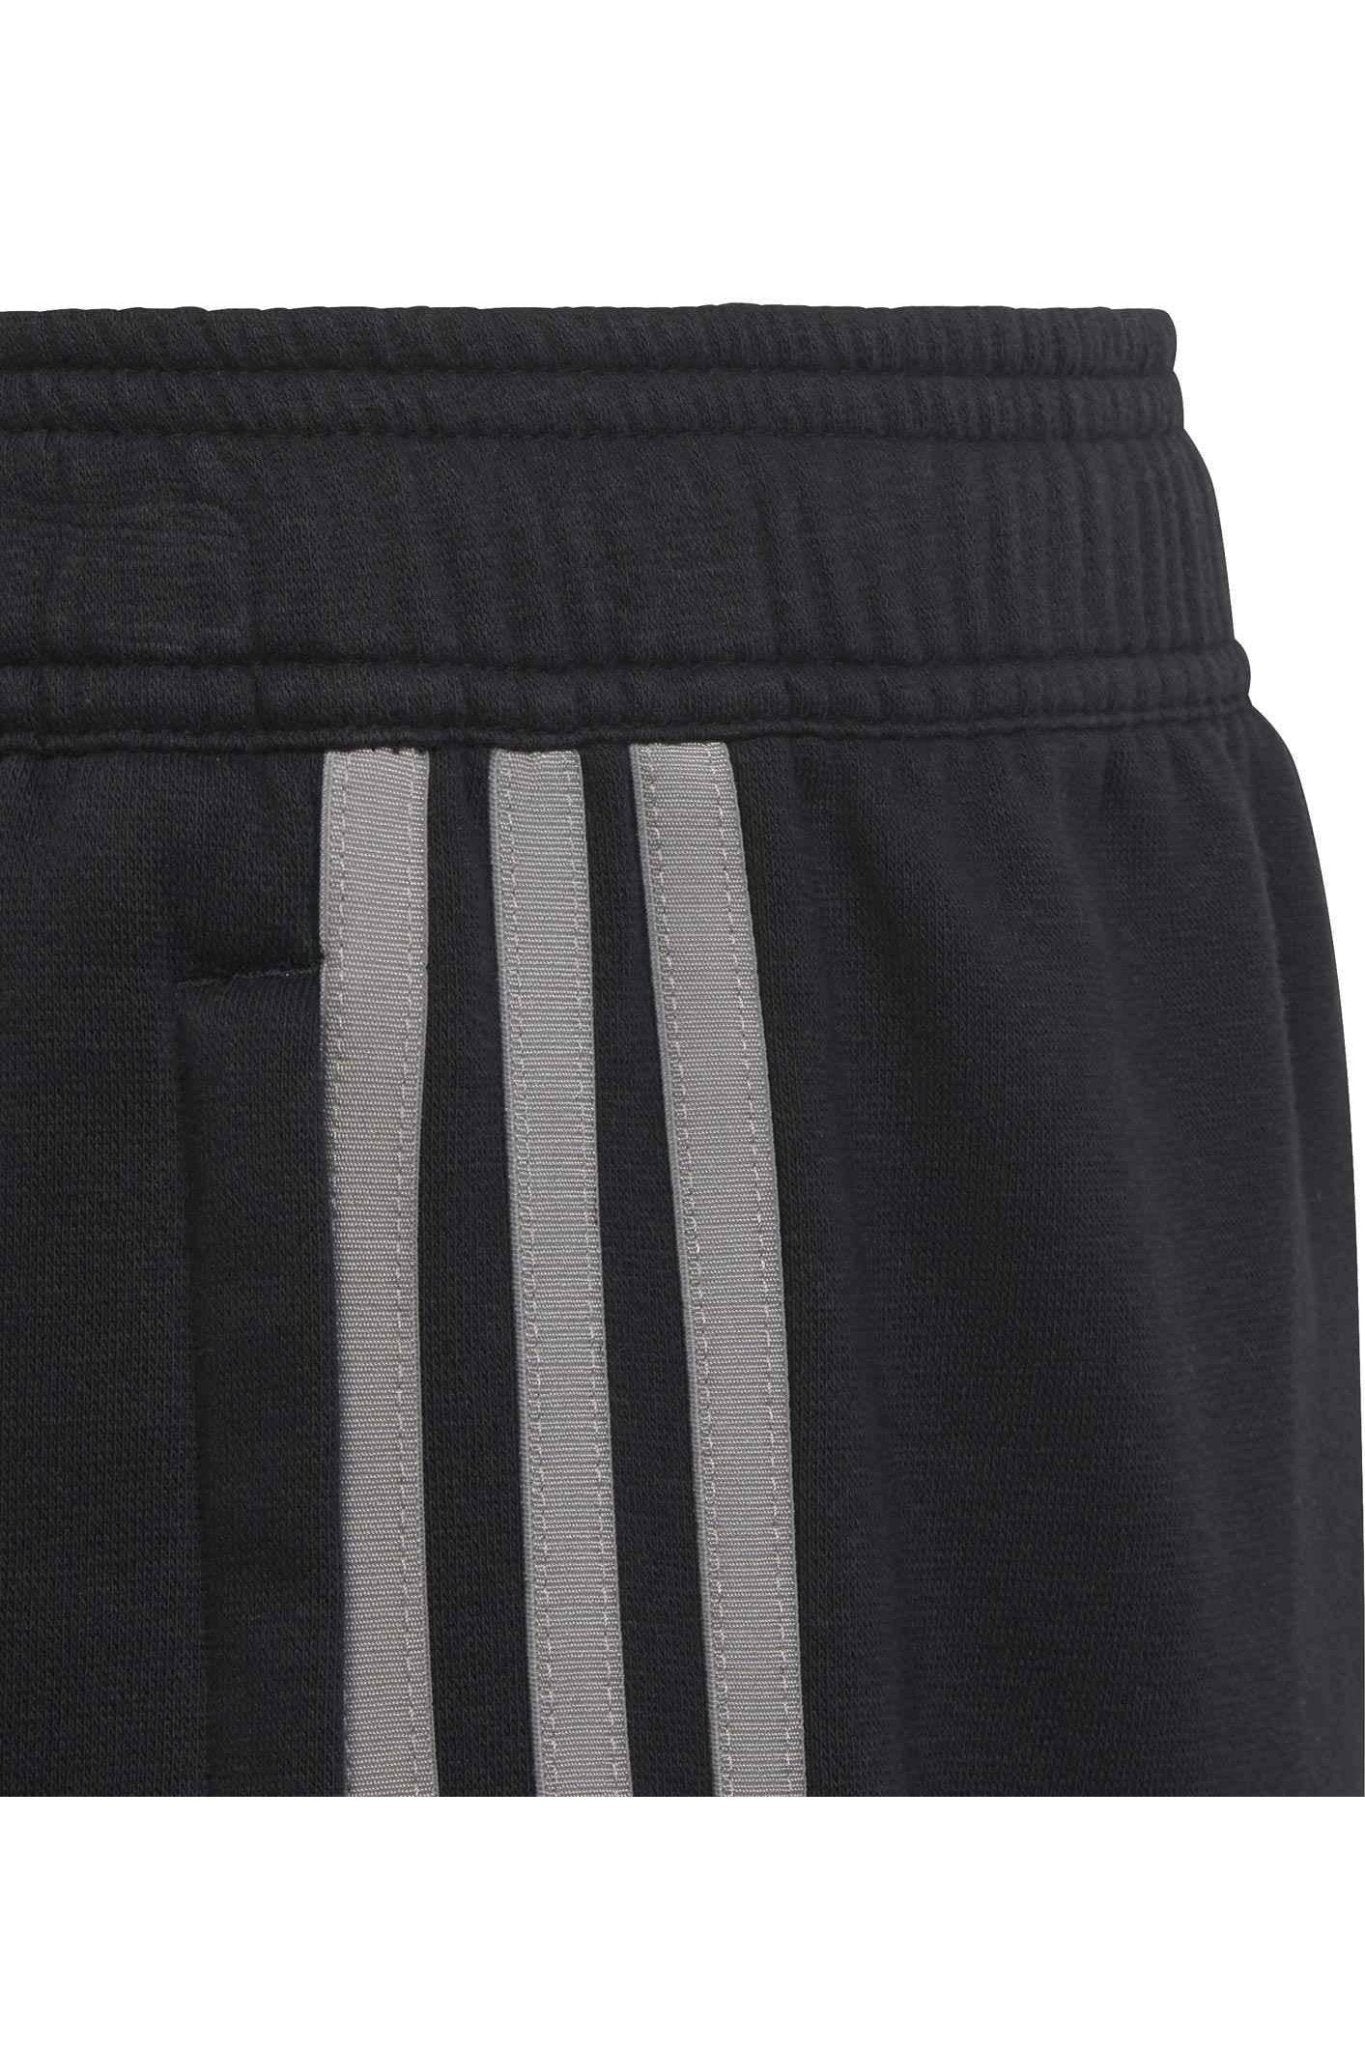 ADIDAS - מכנסיים קצרים לילדים MESSI SHO Y בצבע שחור - MASHBIR//365